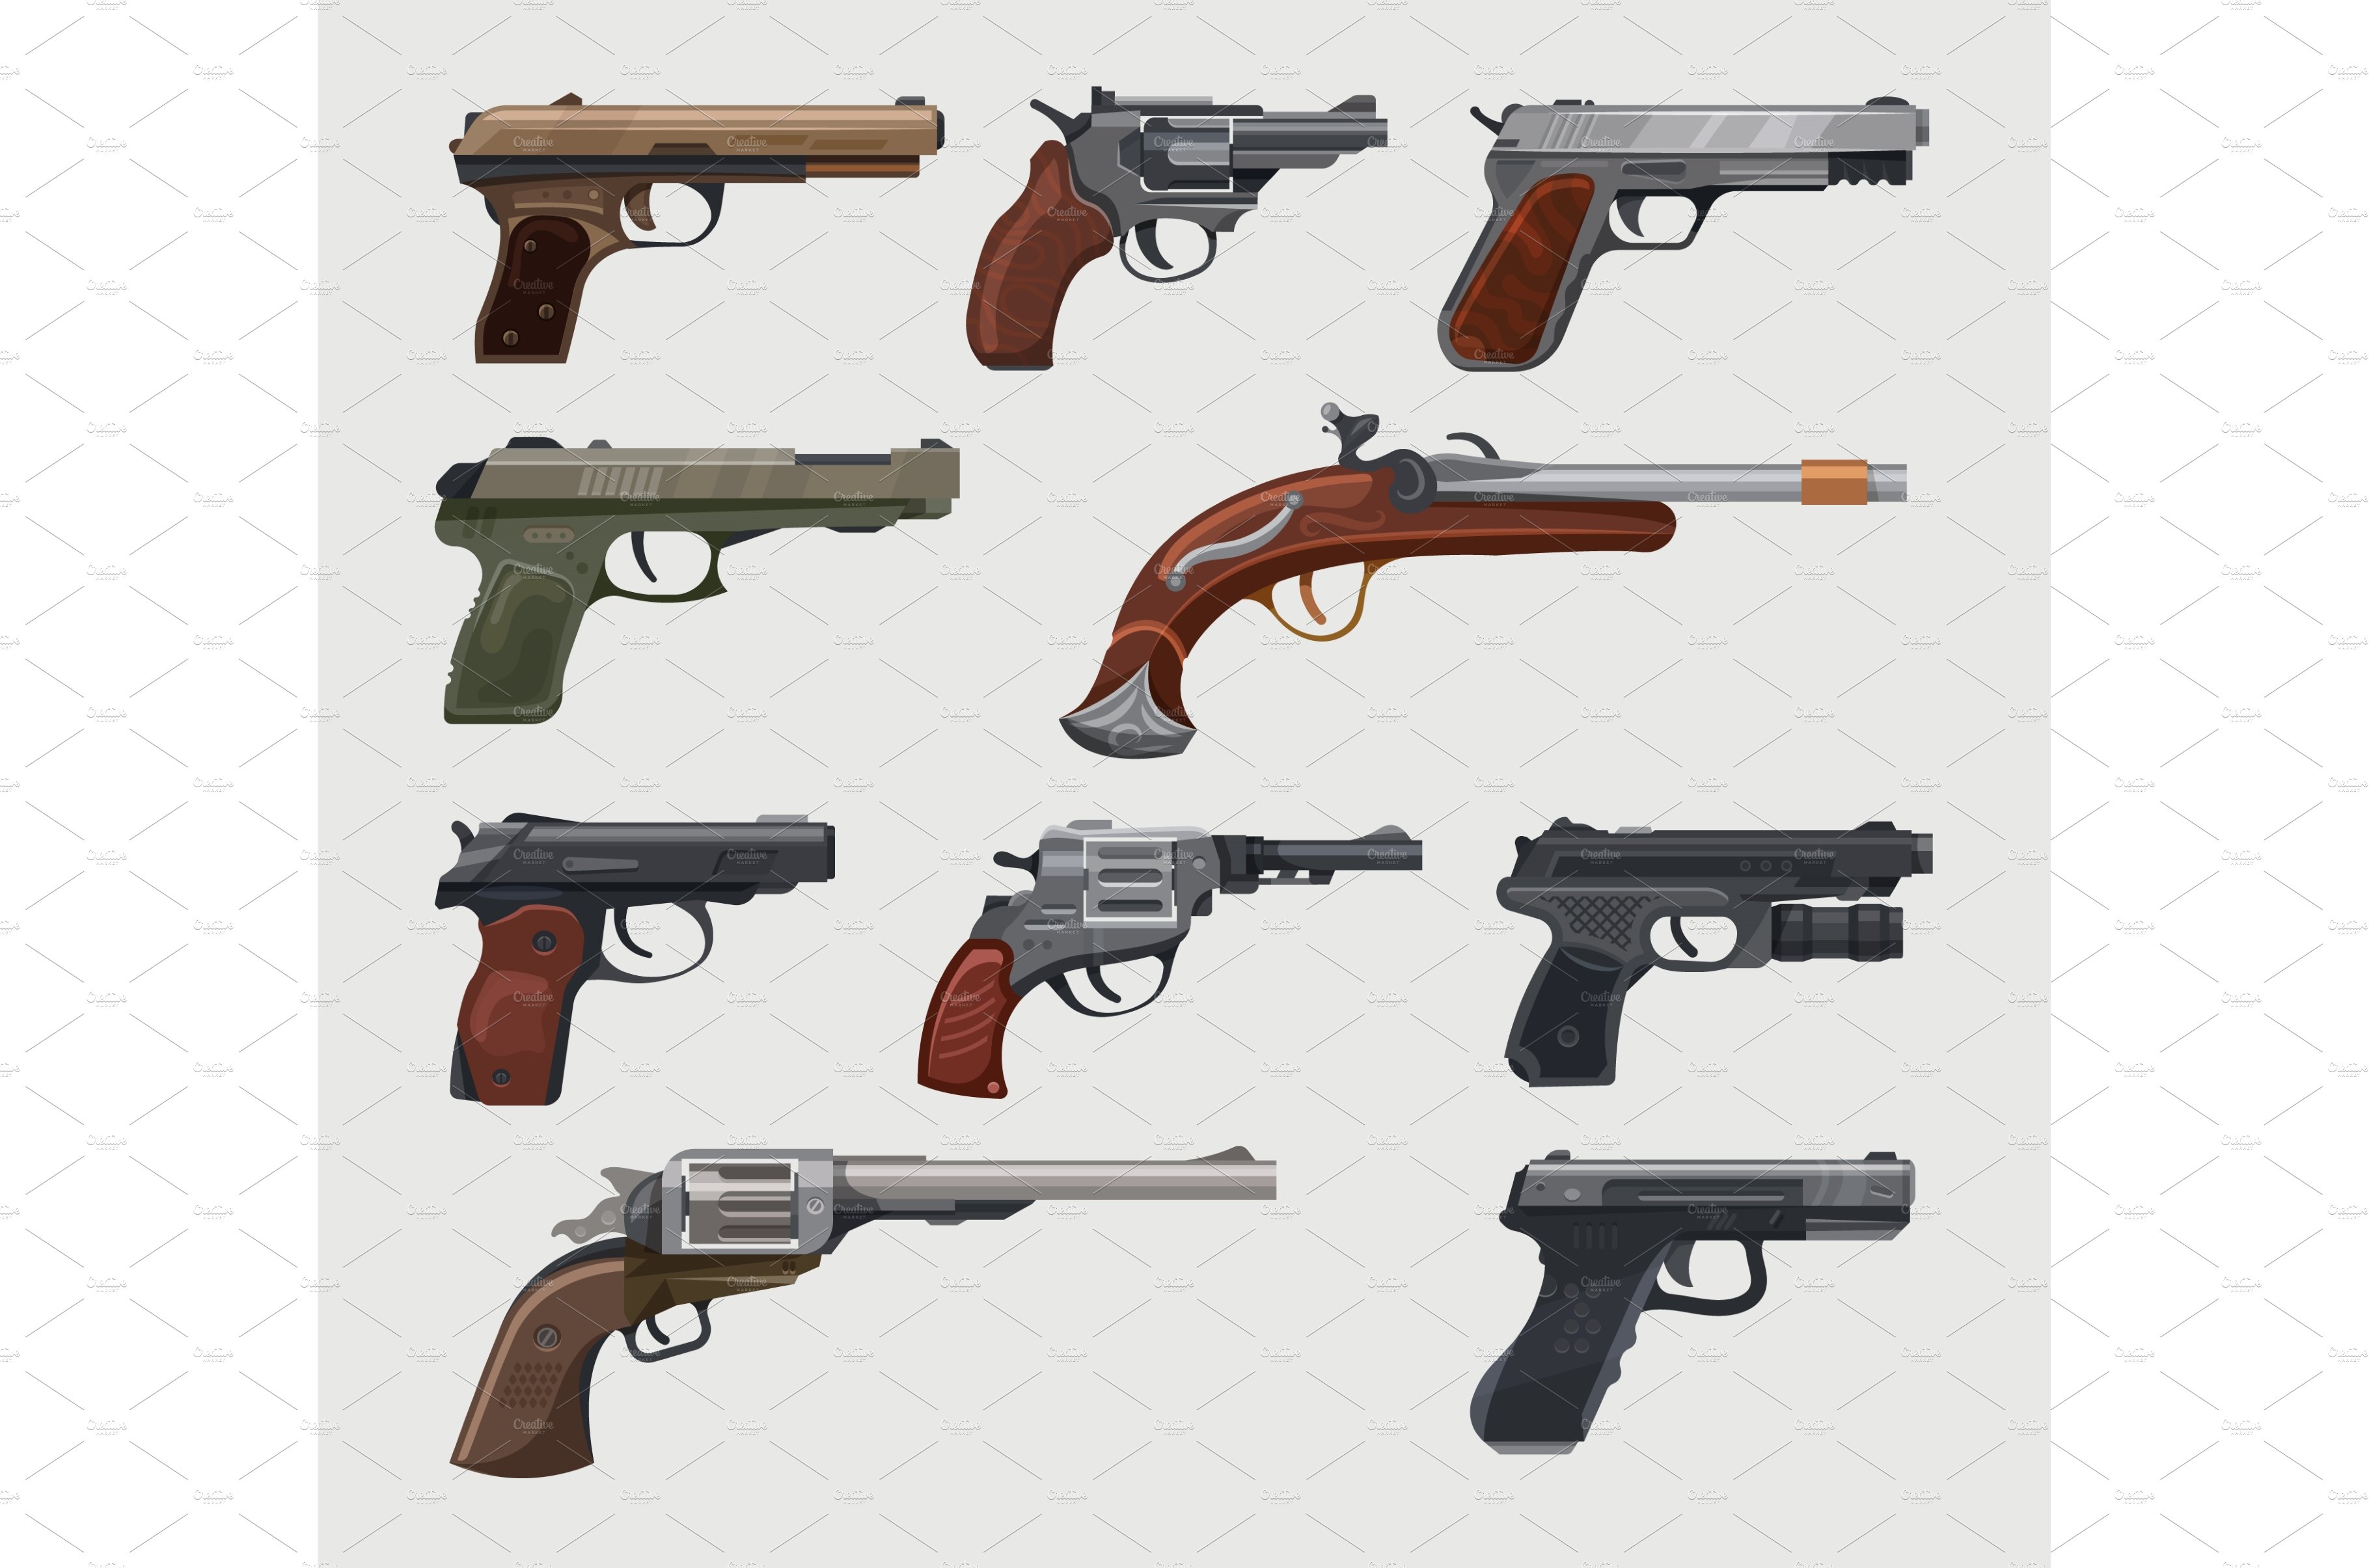 Guns, pistols, revolvers, vintage cover image.